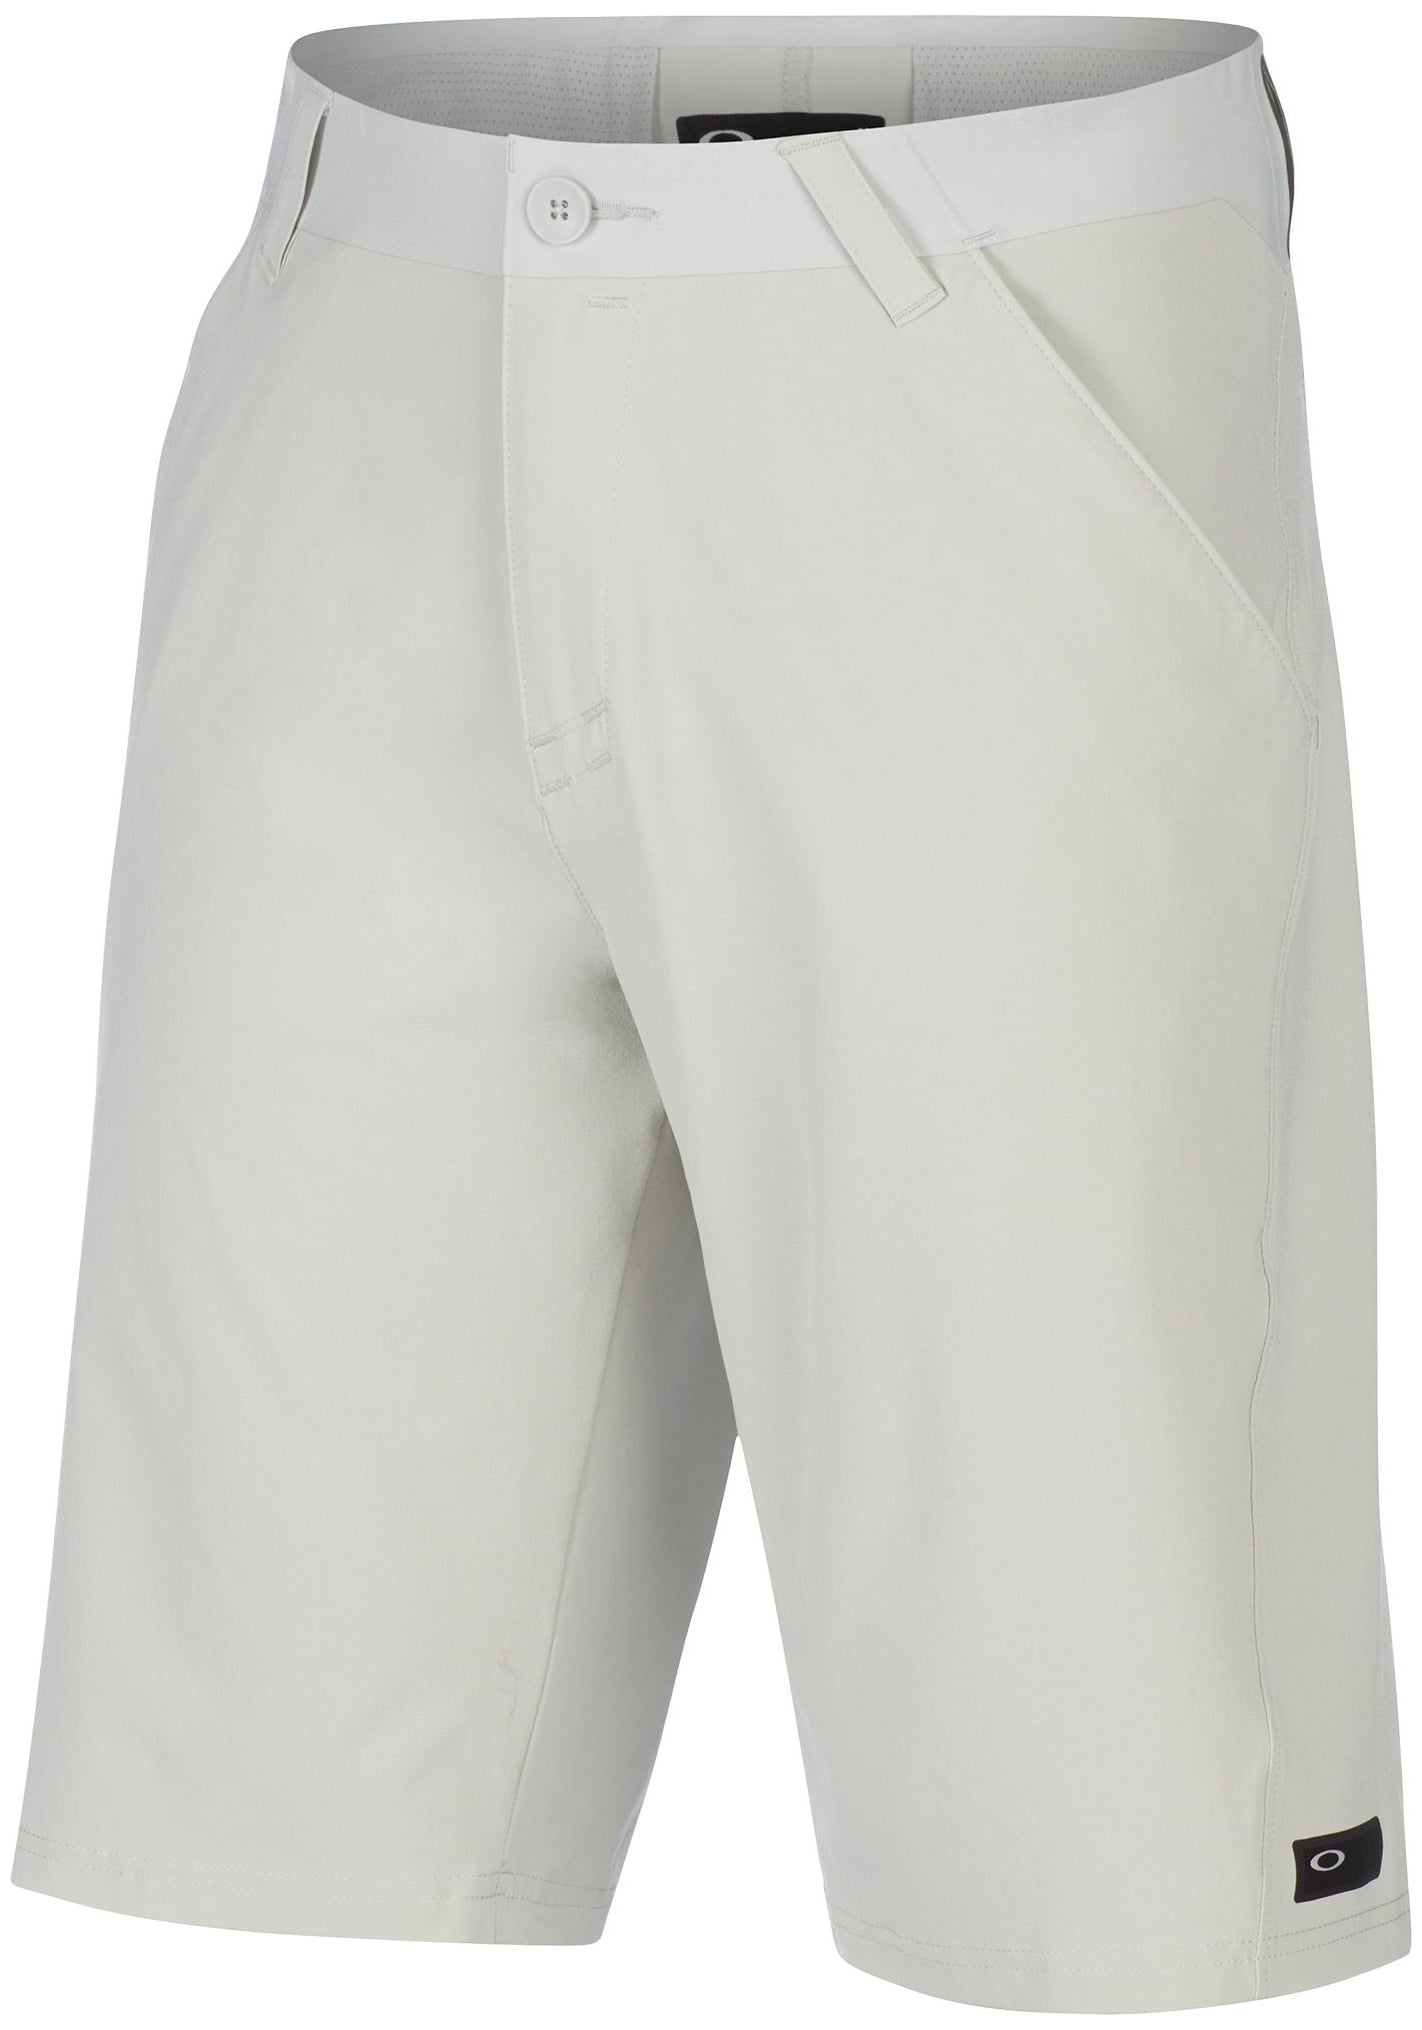 velocity golf shorts (light grey, 34 